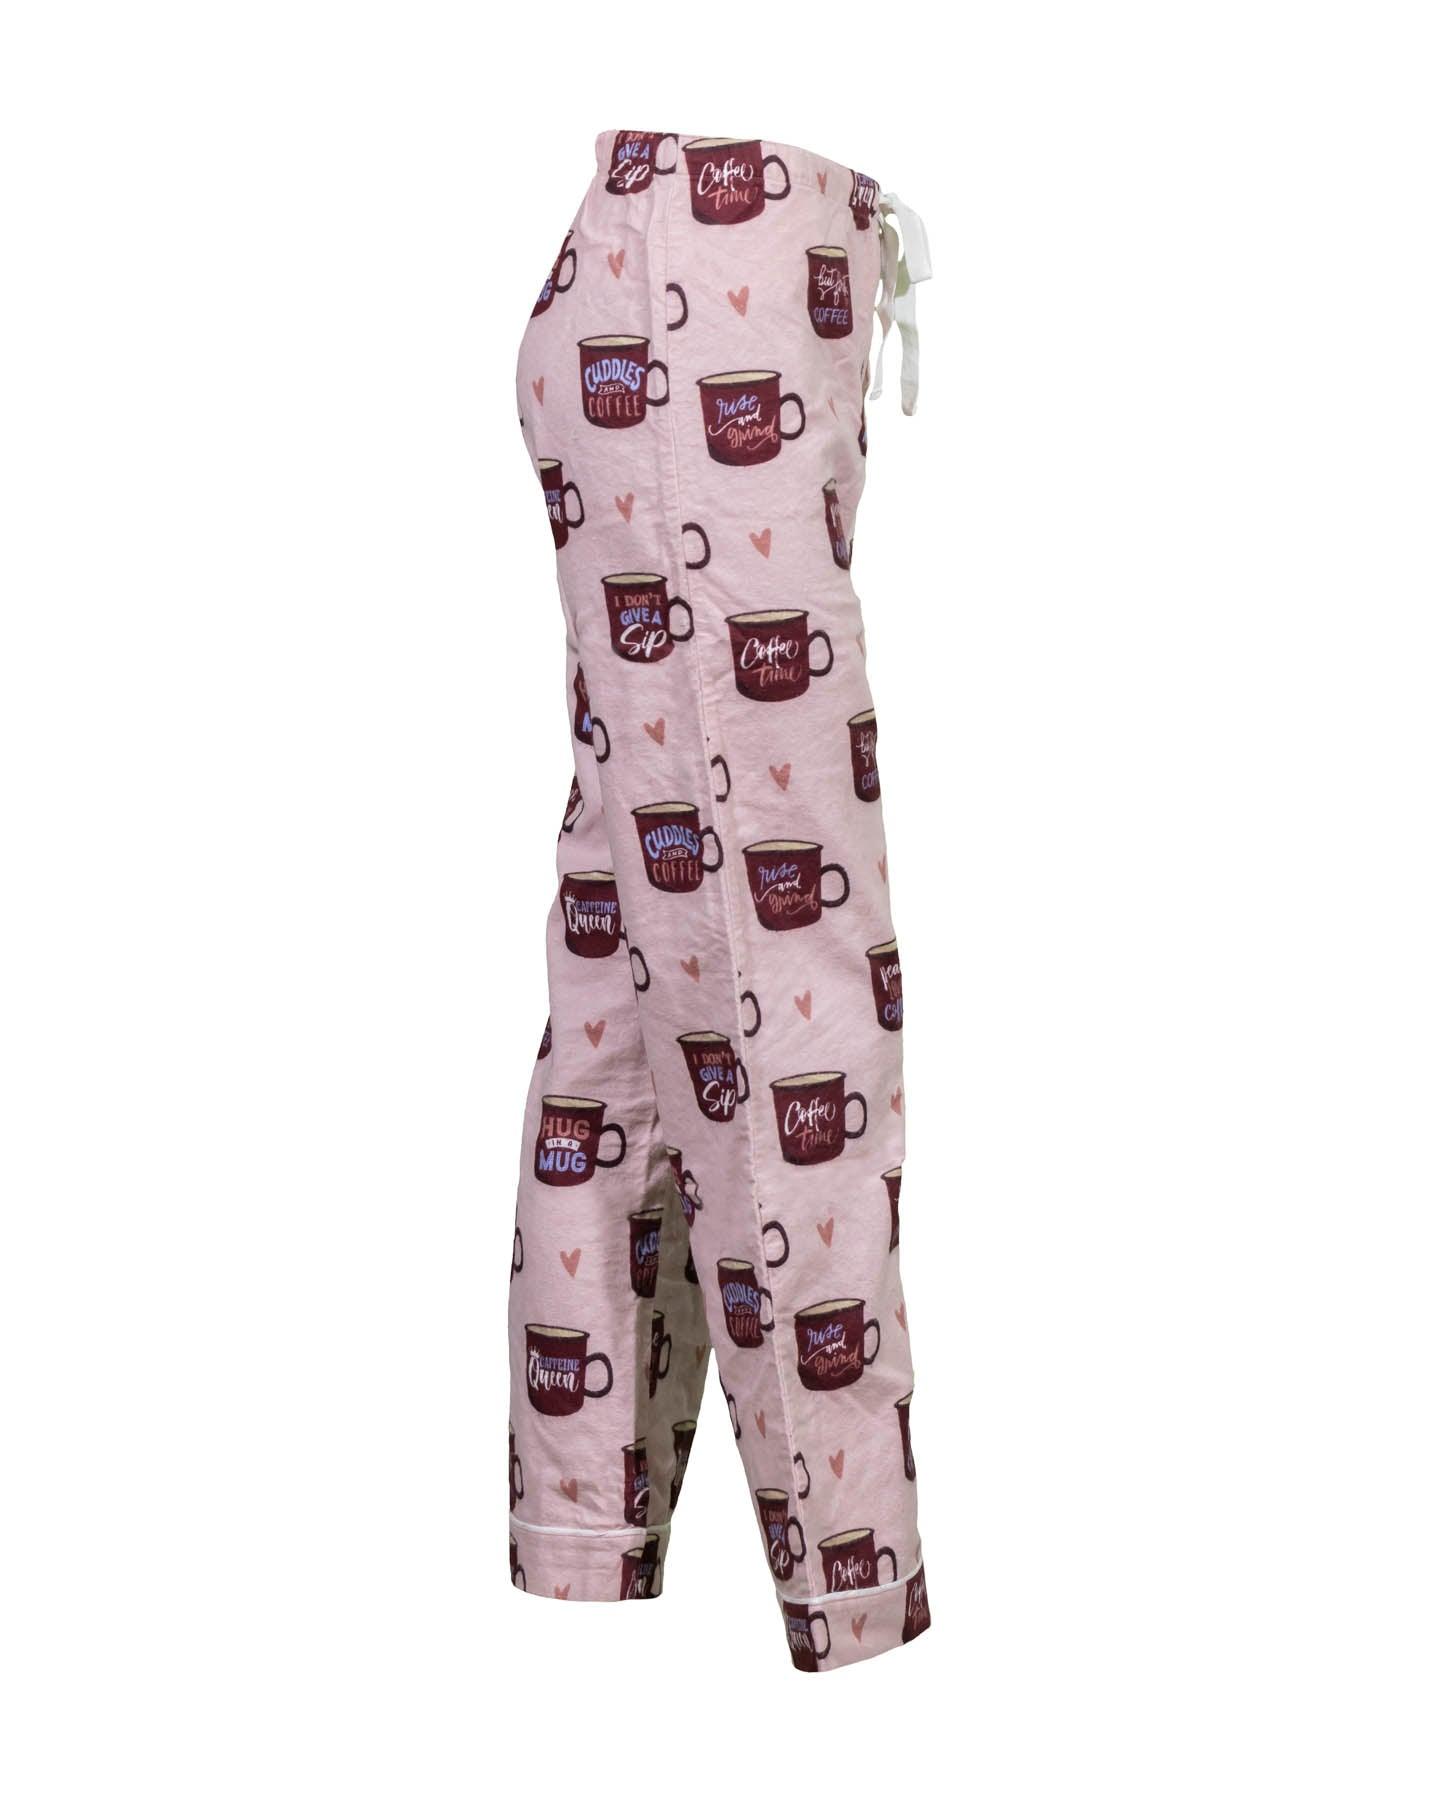 PJ Salvage- Flannel PJ Set in Pink Mist